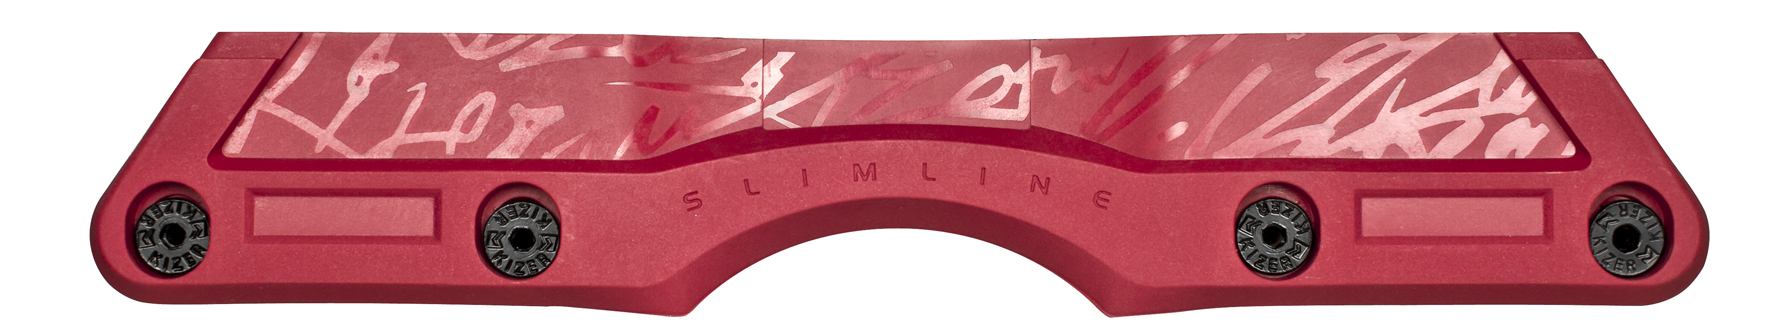 Рама KIZER SLIM LINE II, red 2012 г.